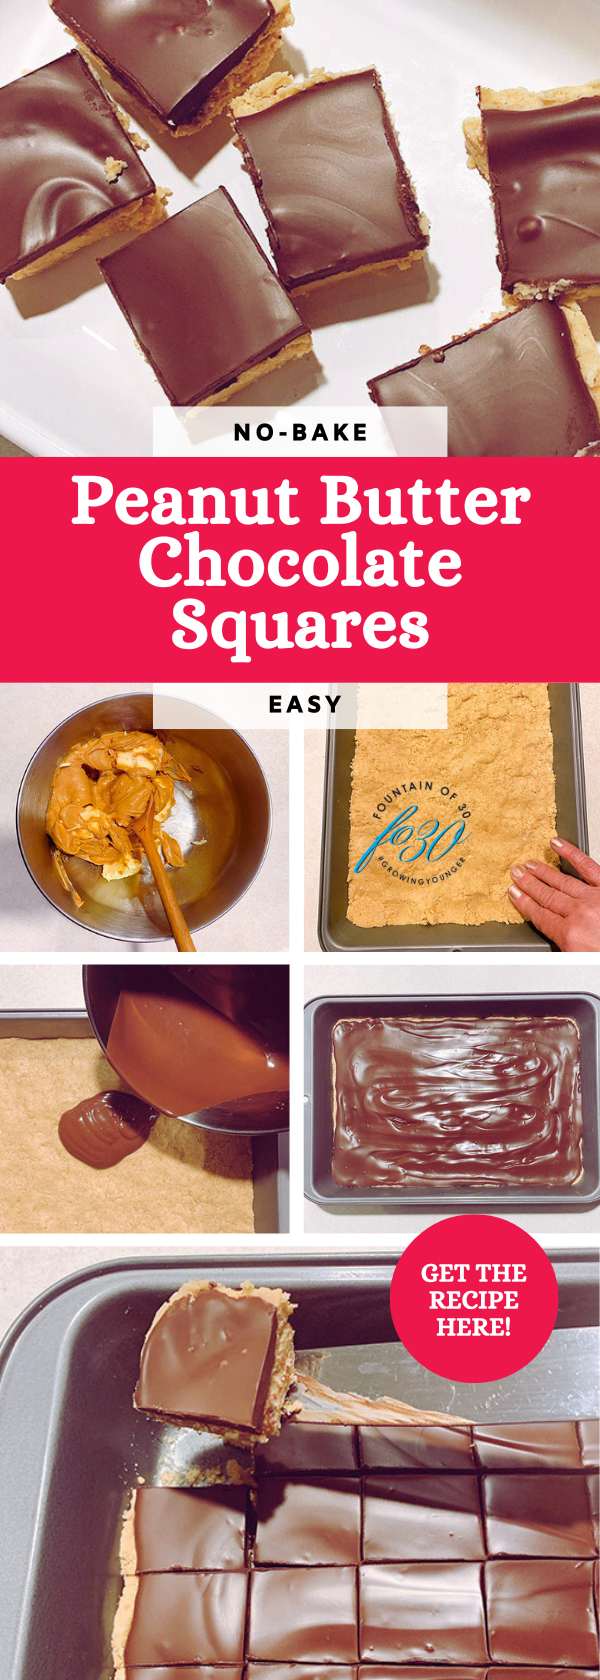 peanut butter chocolate squares no bake reese's copycat recipe fountainof30